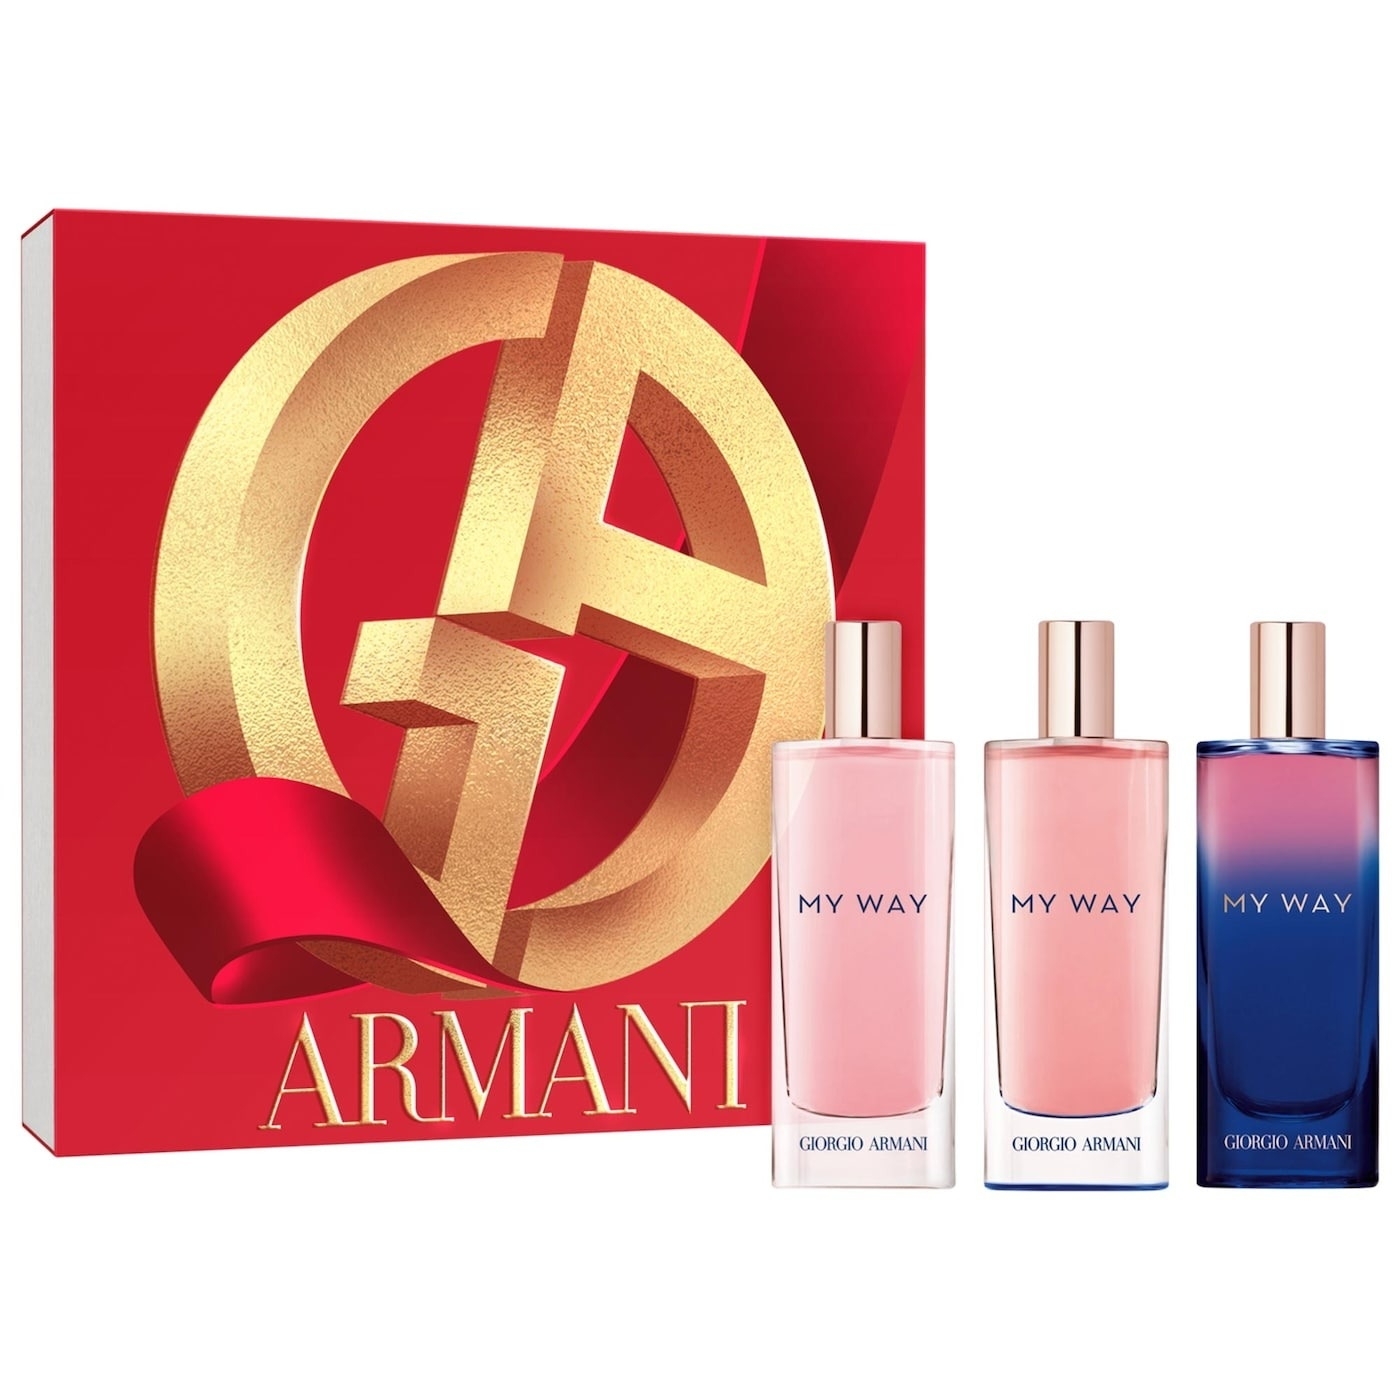 the set with three different Giorgio Armani fragrances